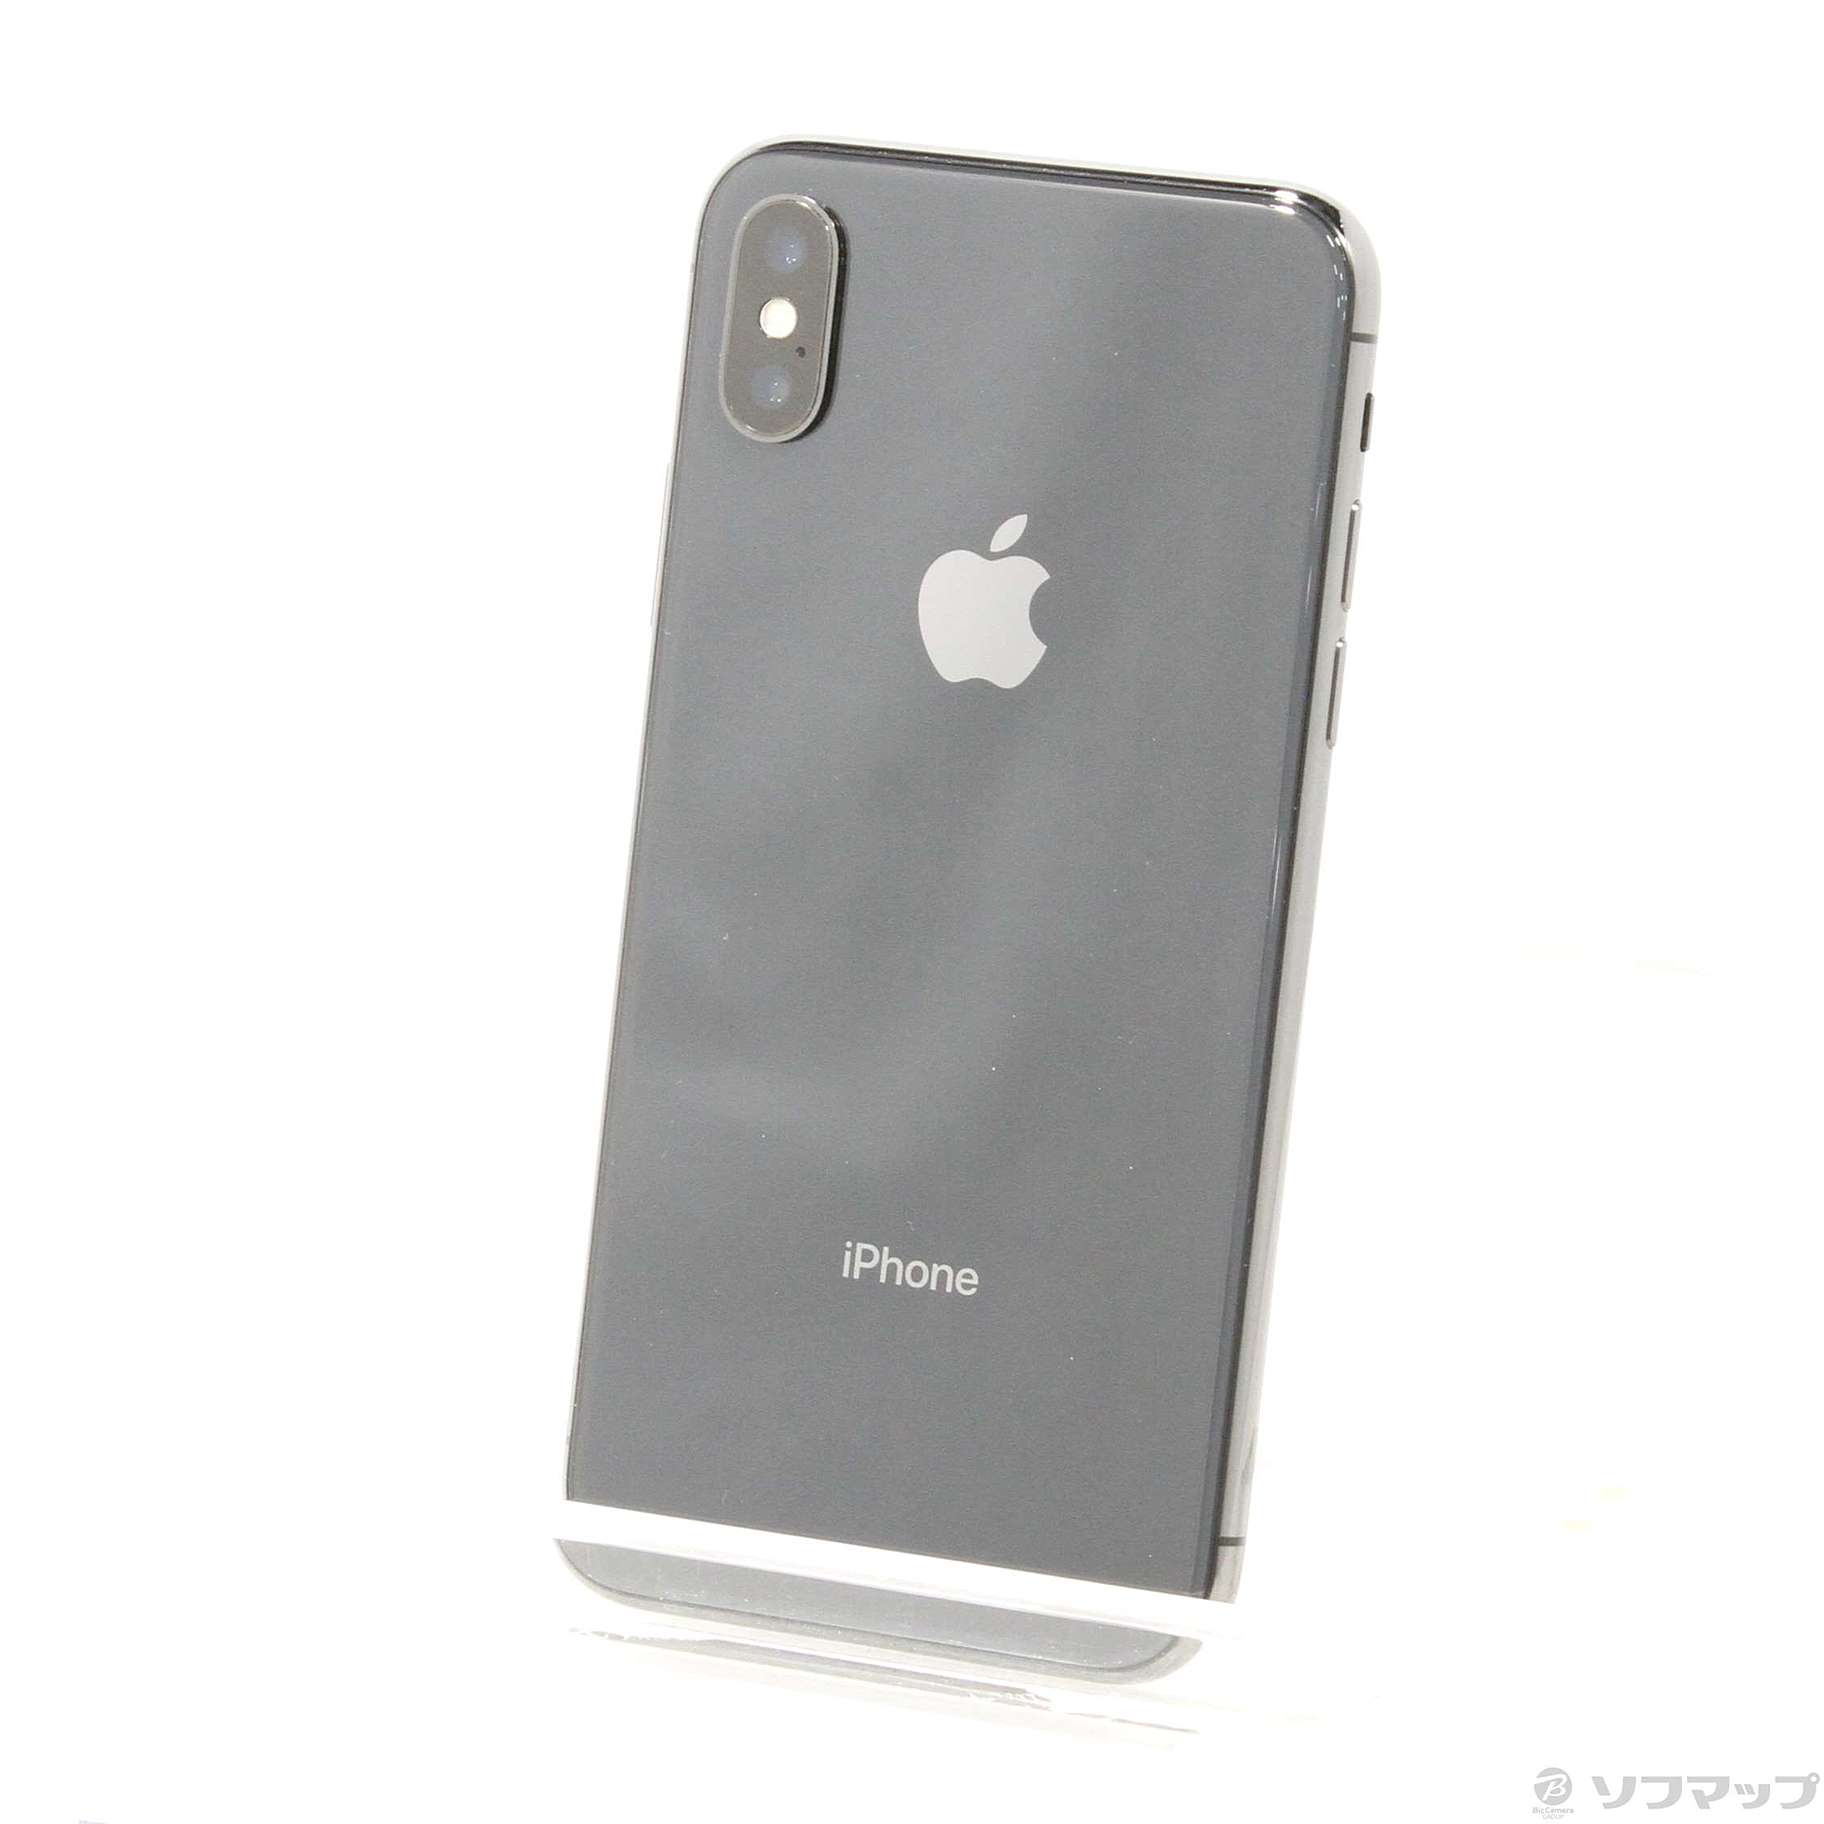 iPhone X 64 GB Softbank MQAX2J A - スマートフォン本体